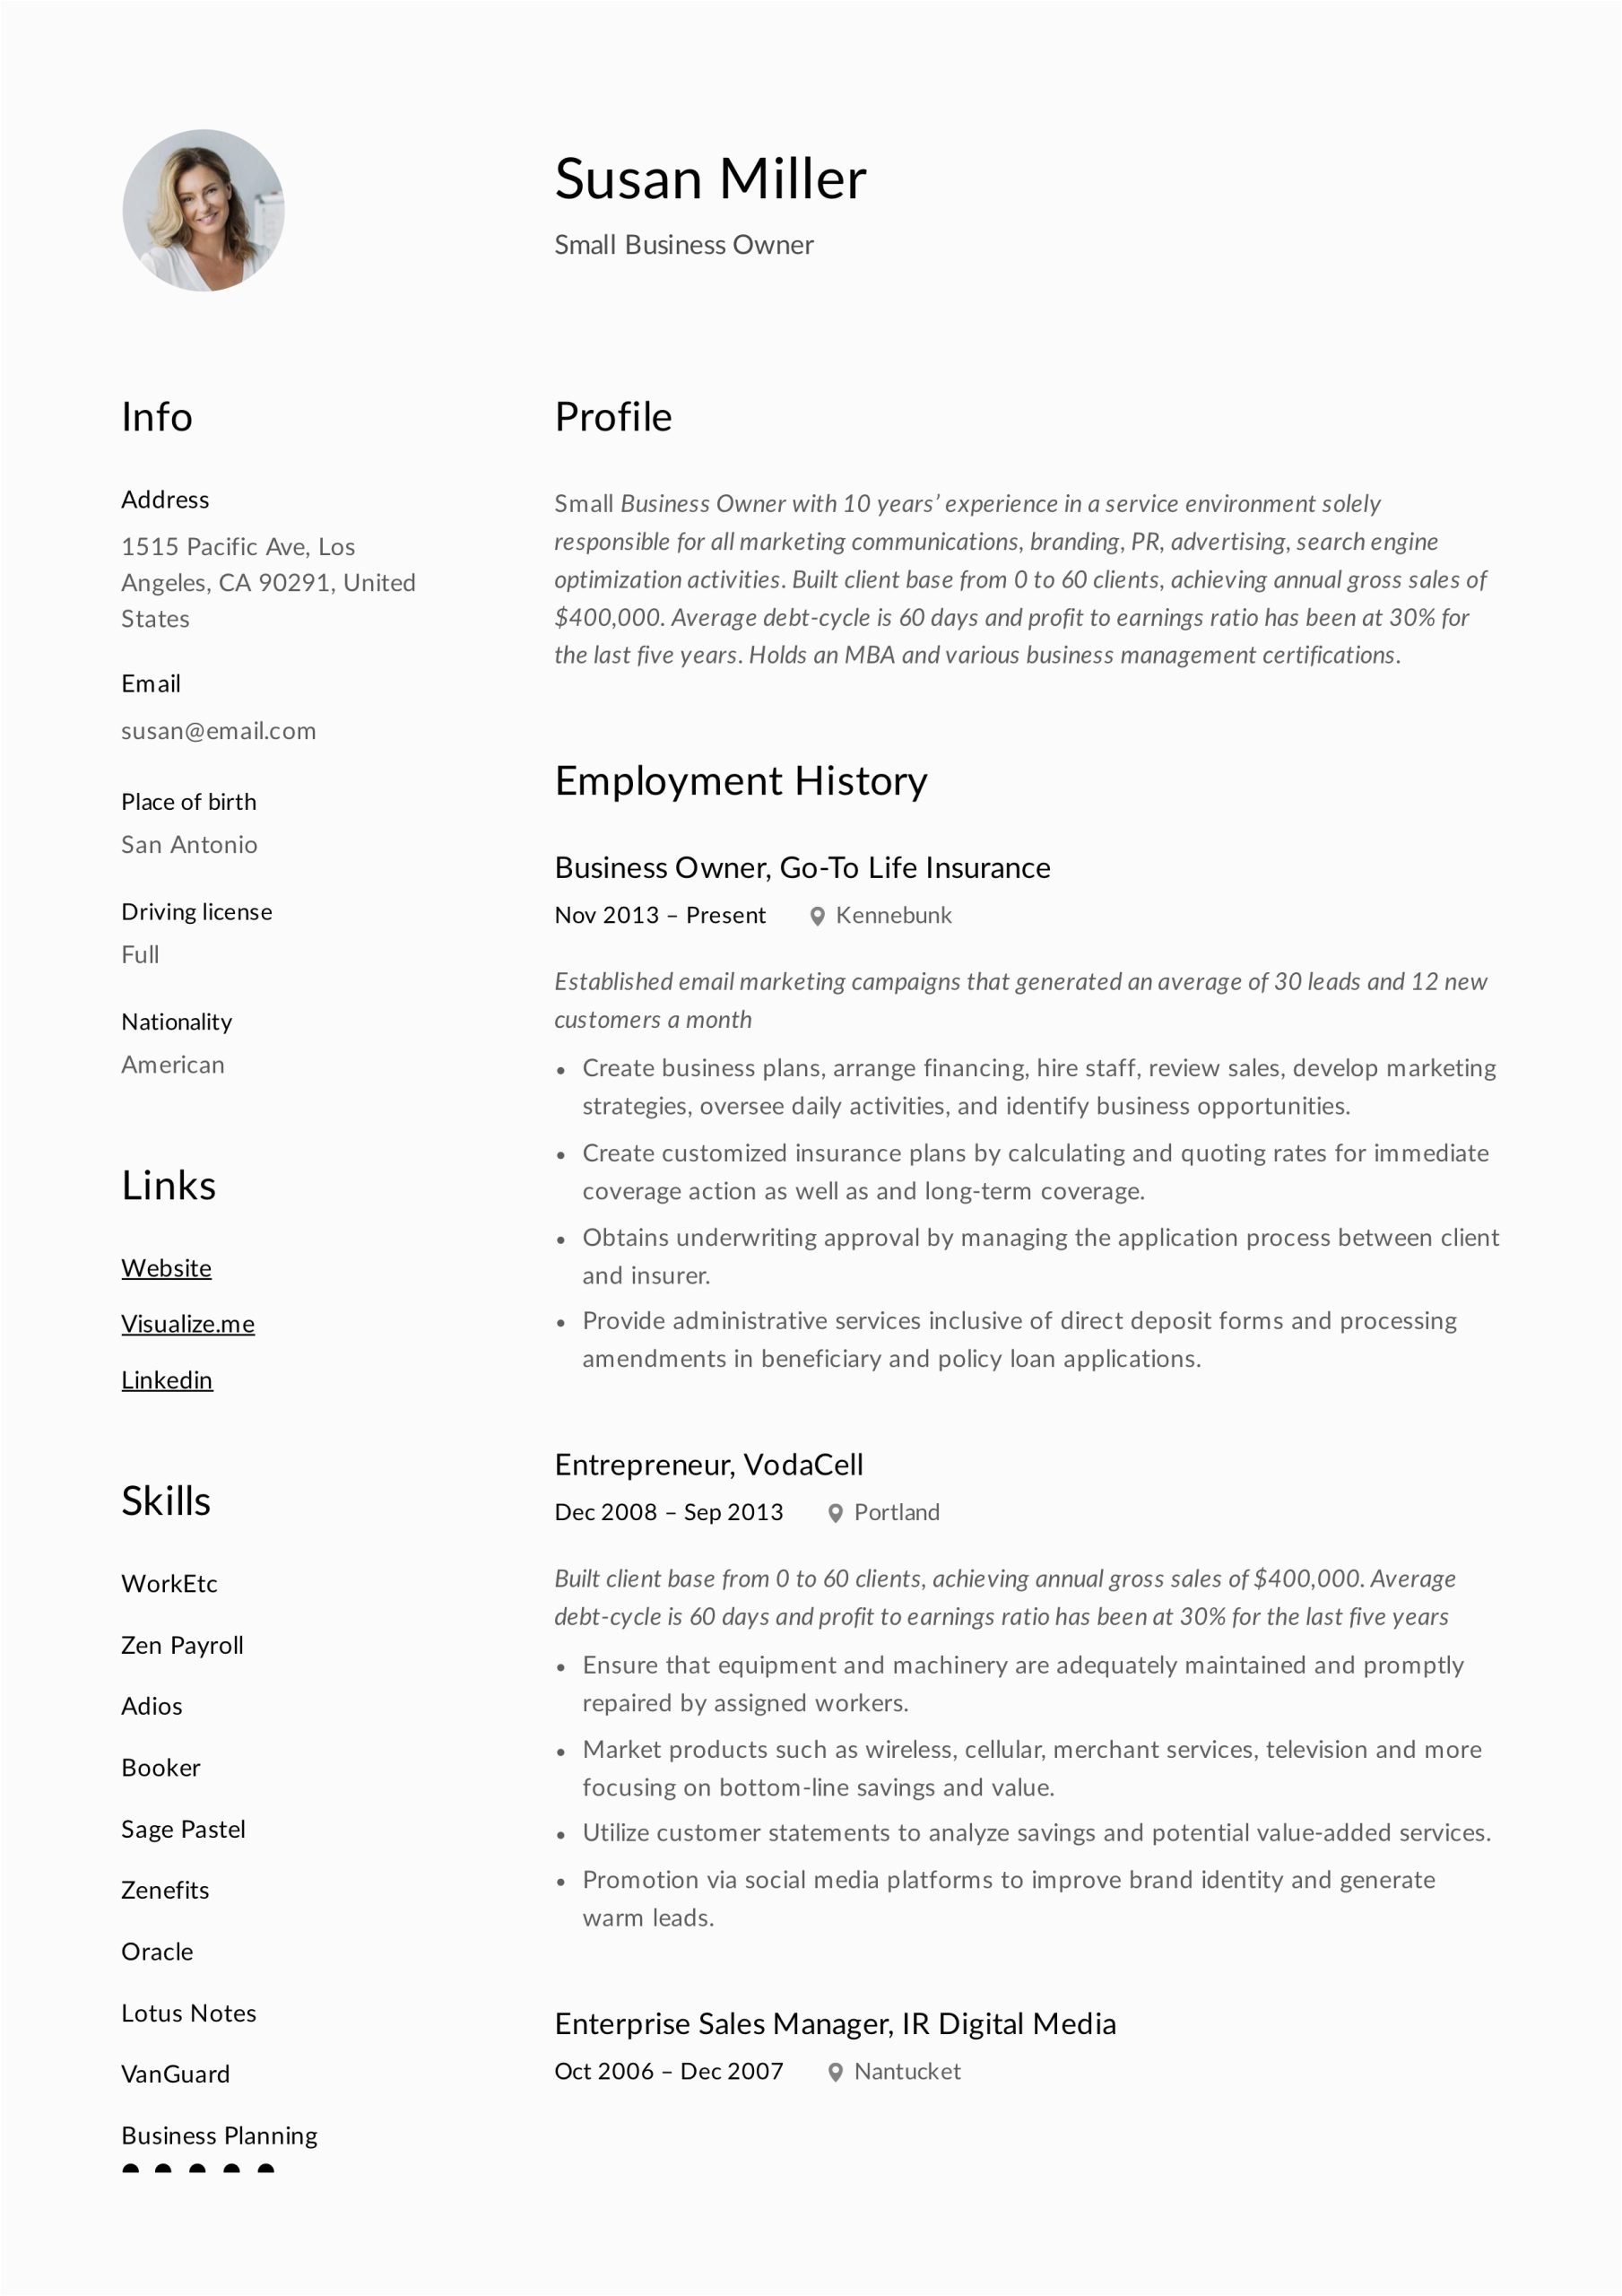 Sample Resume for former Small Business Owner Small Business Owner Resume Guide 12 Examples Pdf